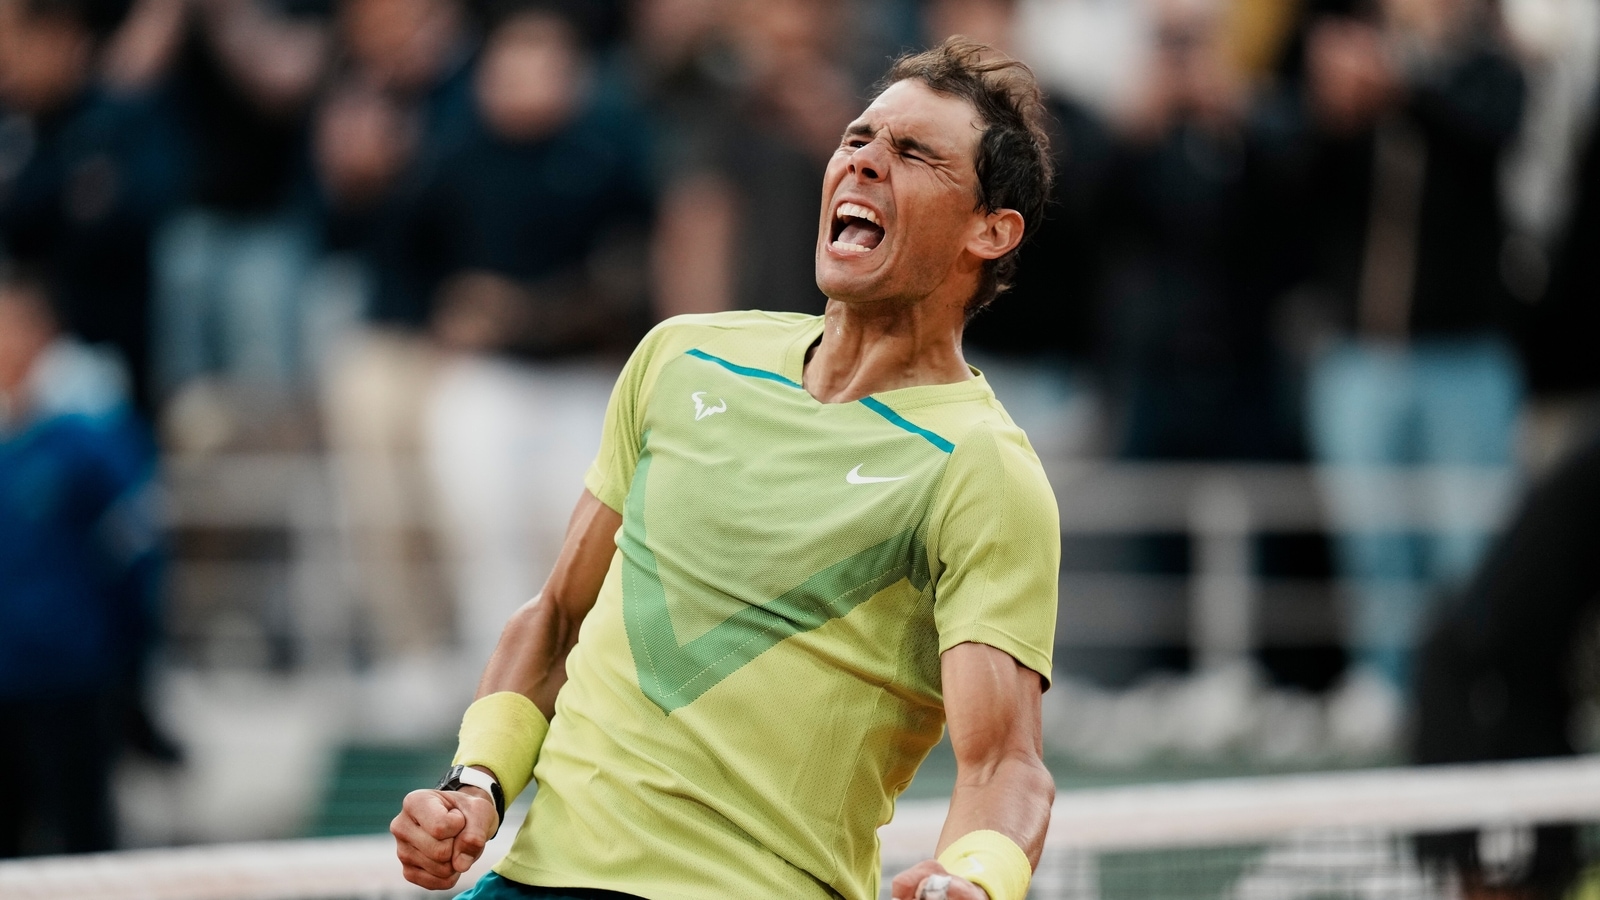 French Open 2022 Nadal sets up blockbuster quarterfinal clash against Djokovic Tennis News